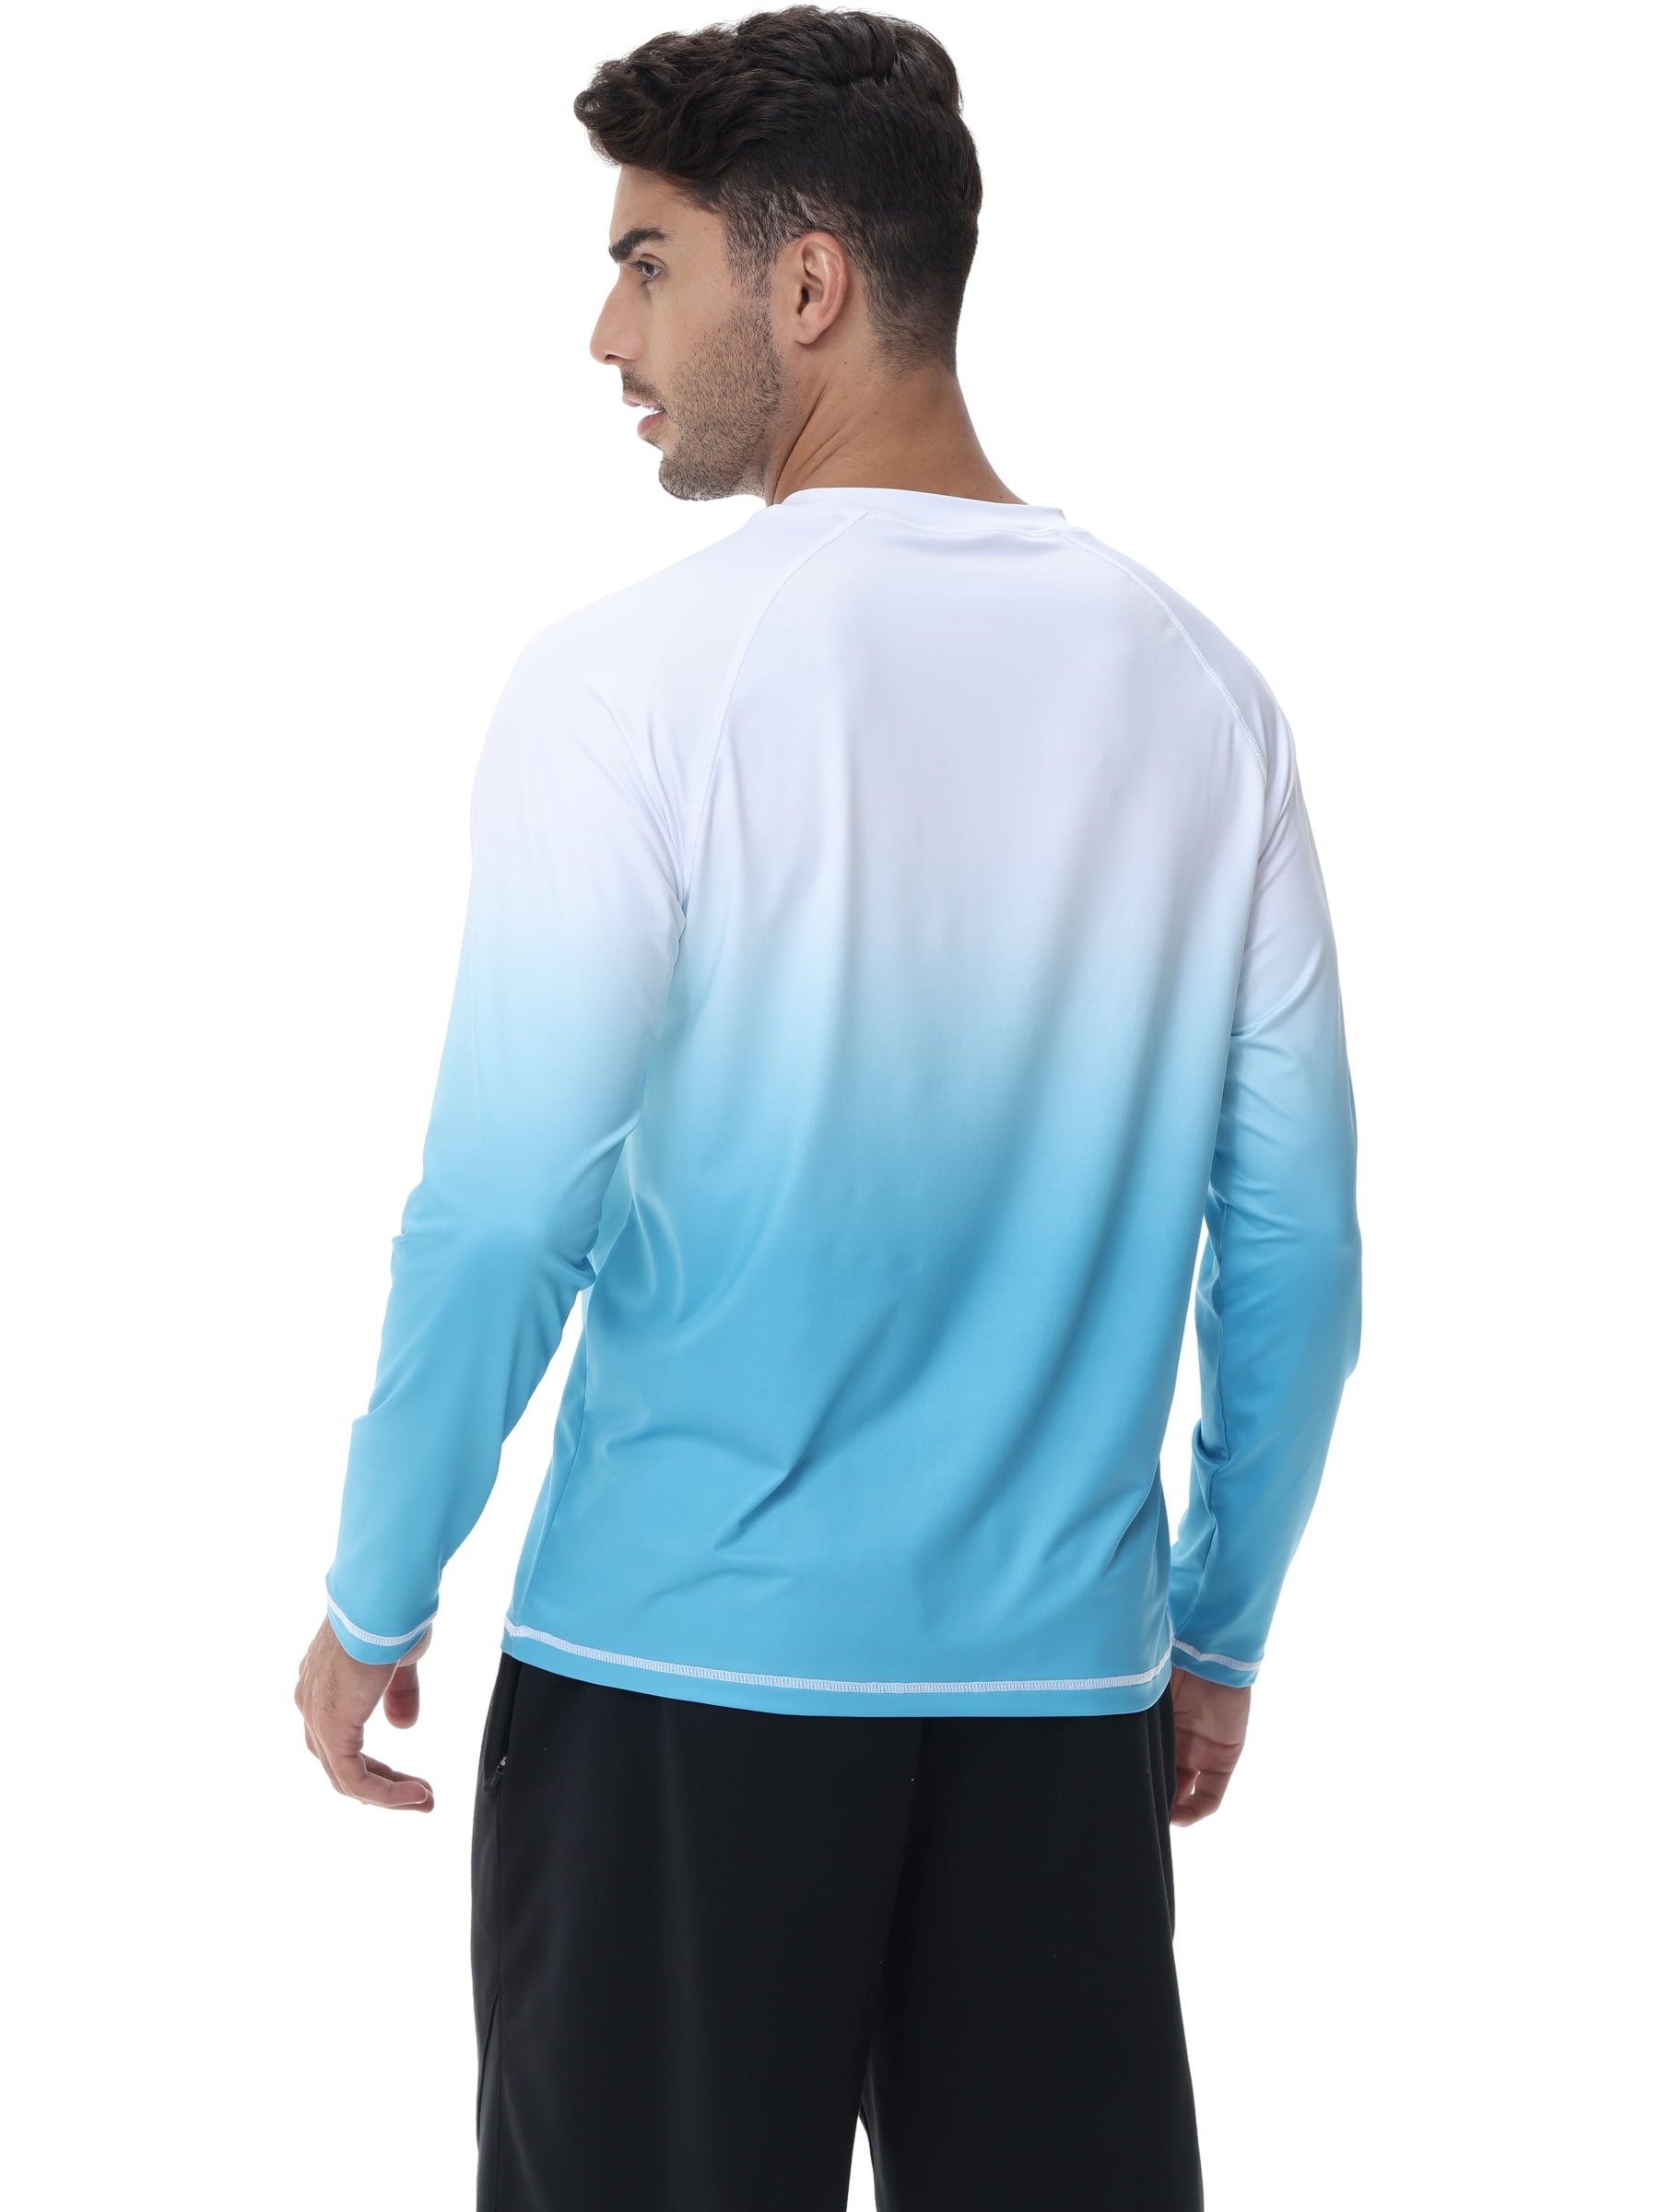 Pdbokew Long Sleeve Swim Shirts for Men Sun Protection Shirt Running  Rashguard UPF 50+ UV Swimwear Athletic Workout Navy Gradient White Size XL  